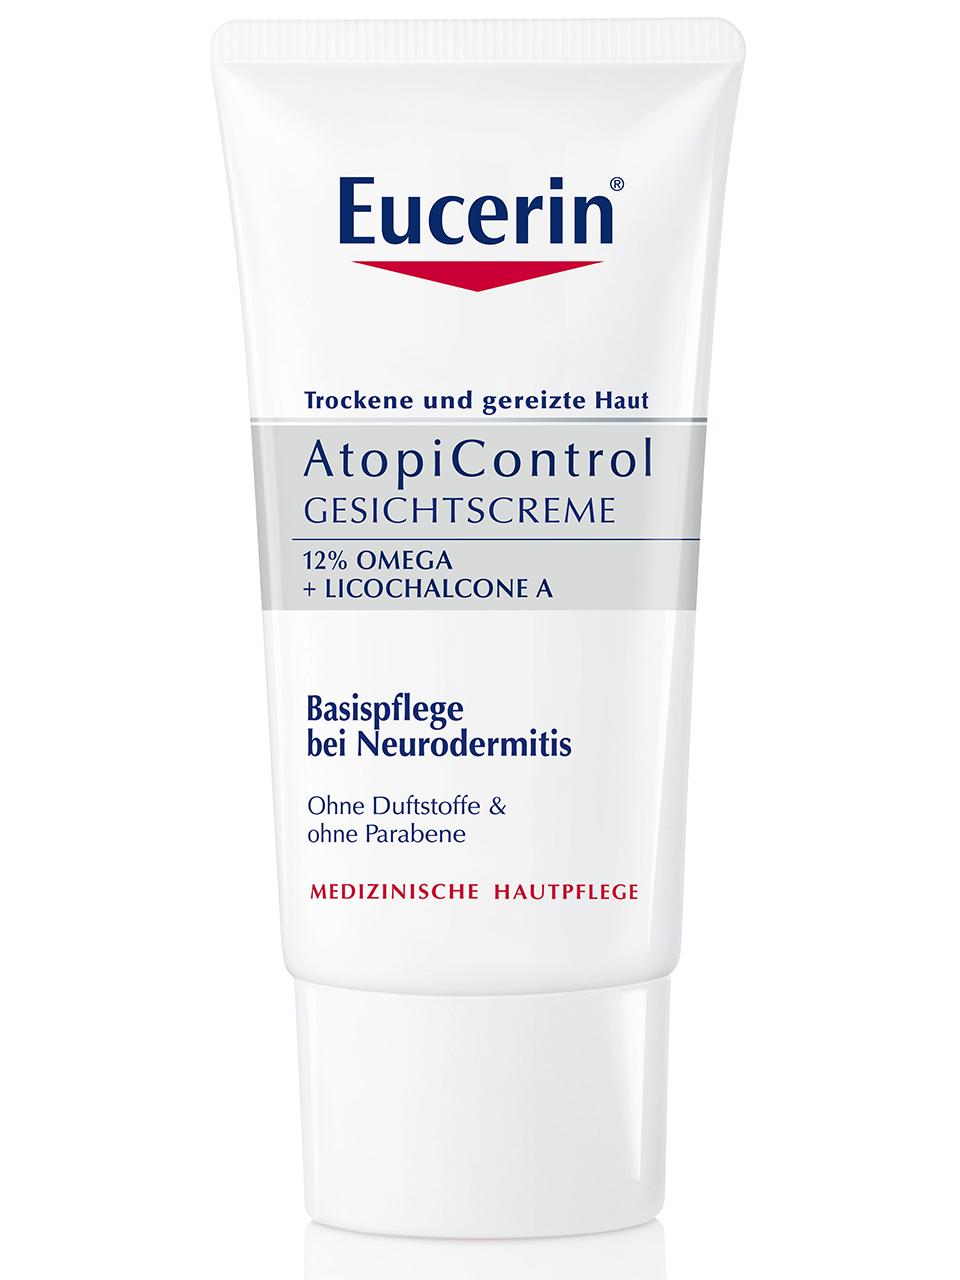 Eucerin AtopiControl GESICHTSCREME 12% Omega